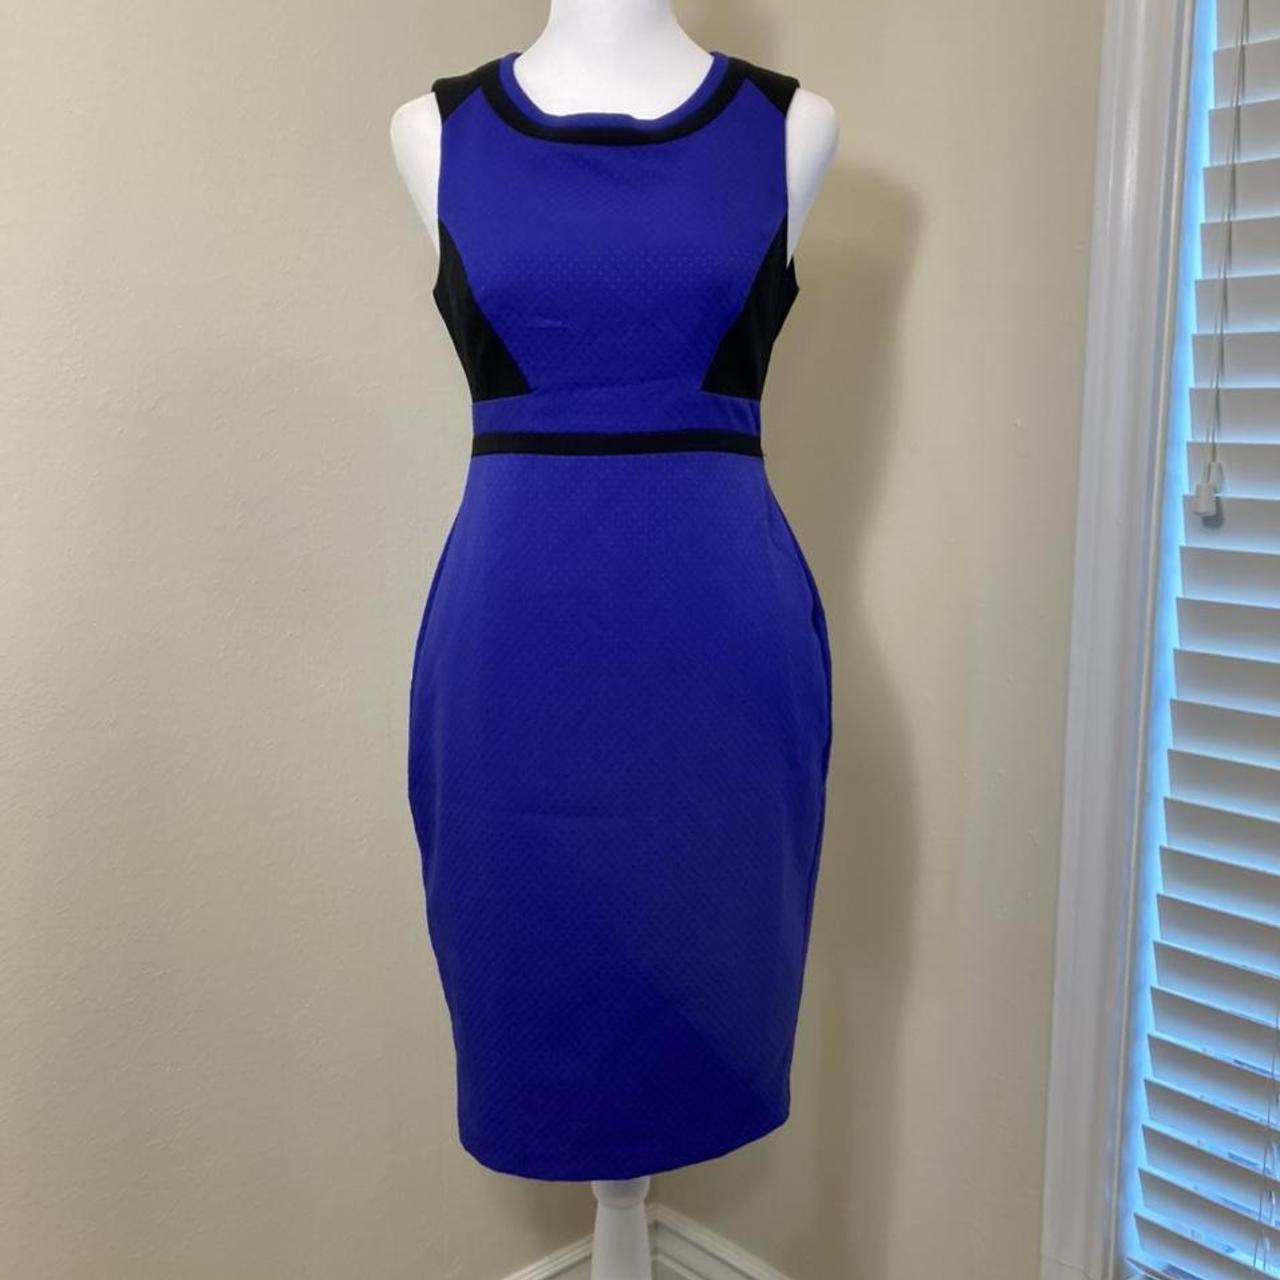 Dorothy Perkins Women's Blue and Black Dress